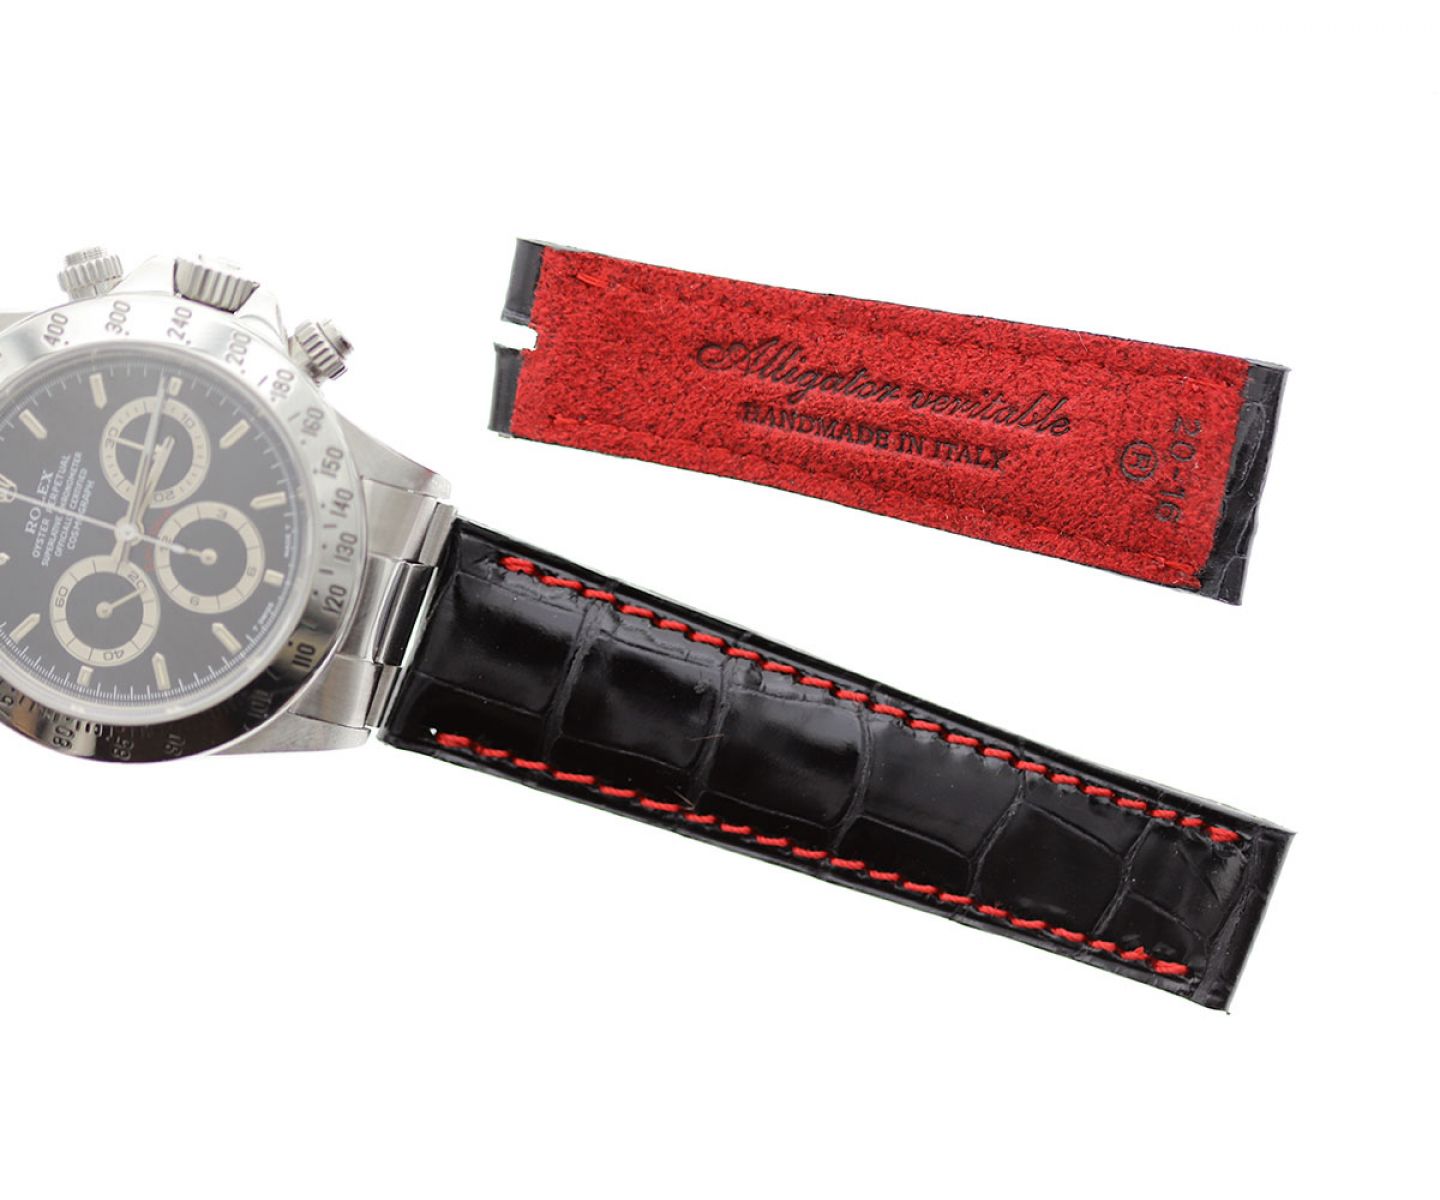 Black Alligator Big Scales Leather strap 20mm Rolex Daytona style. Red stitching